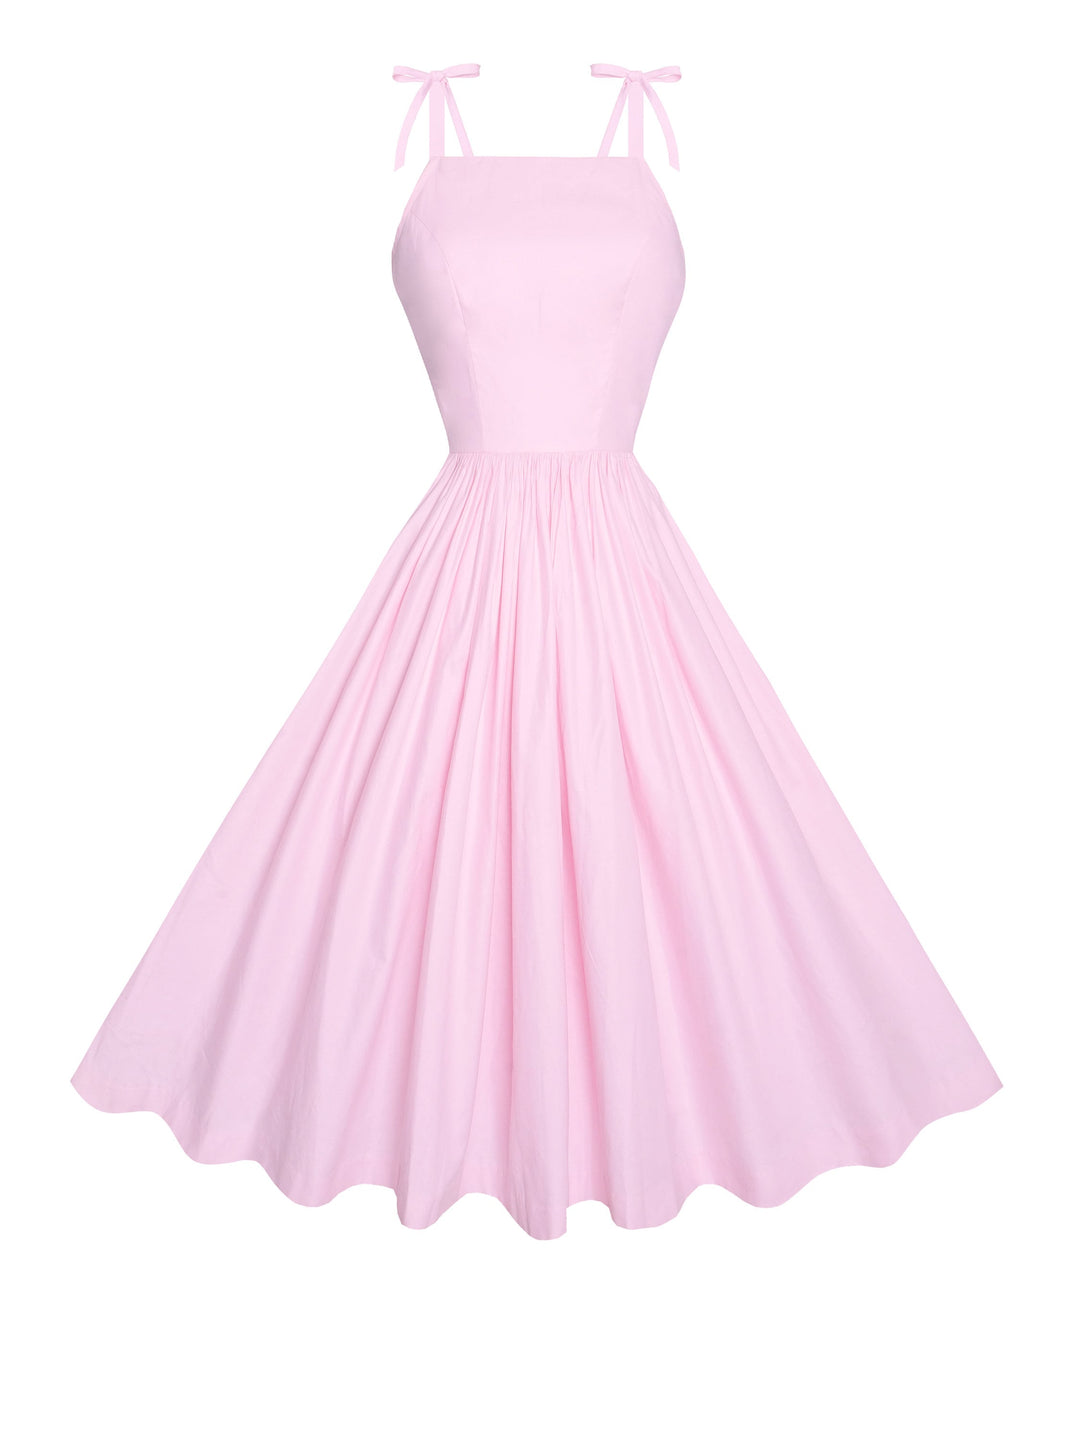 RTS - Size S - Lara Dress Ballerina Pink Cotton